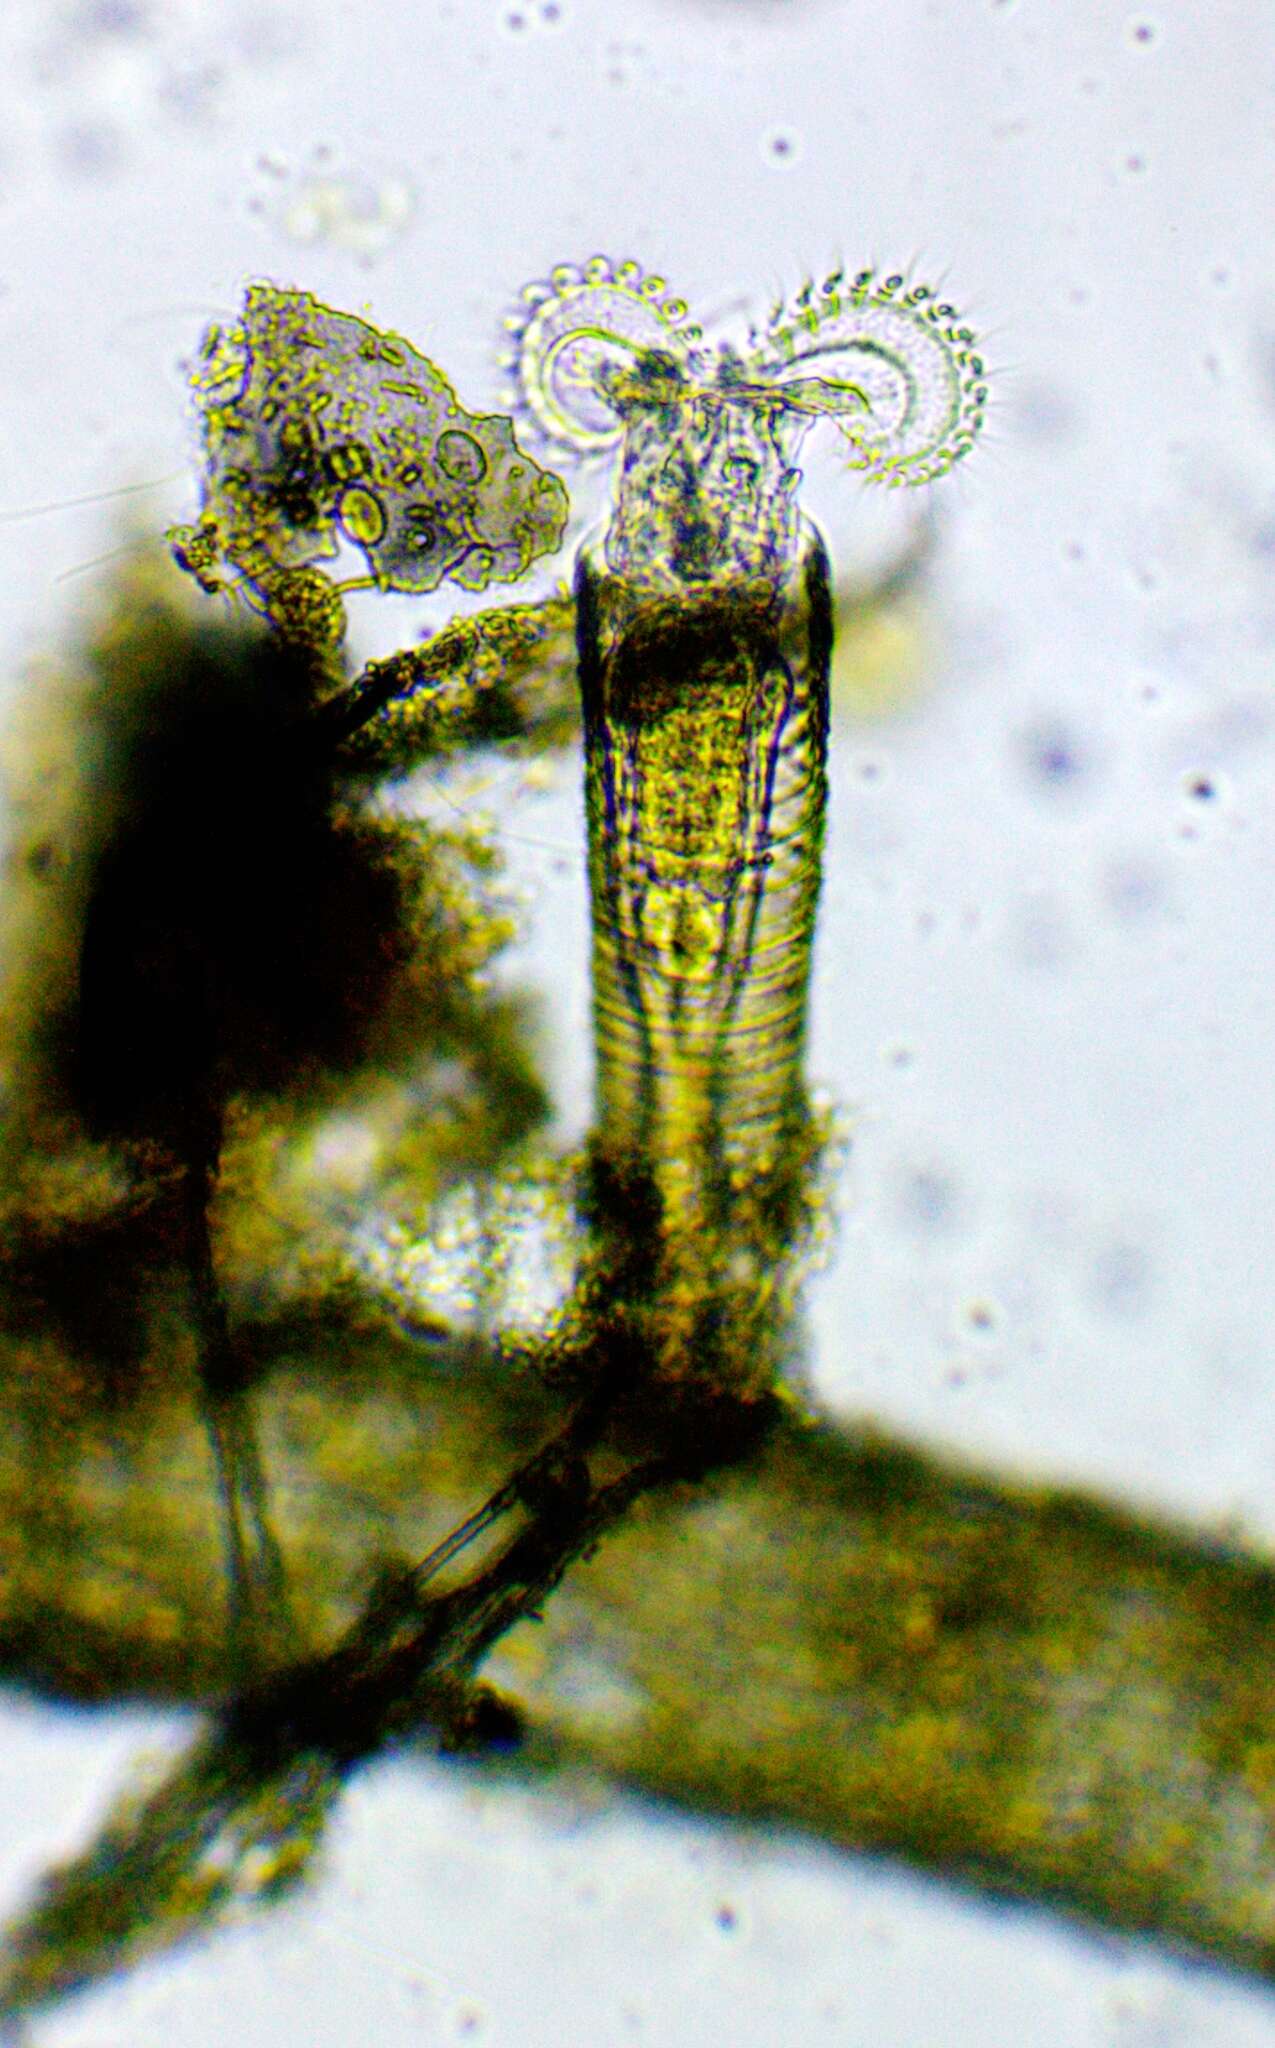 Image of Limnias melicerta Weisse 1848